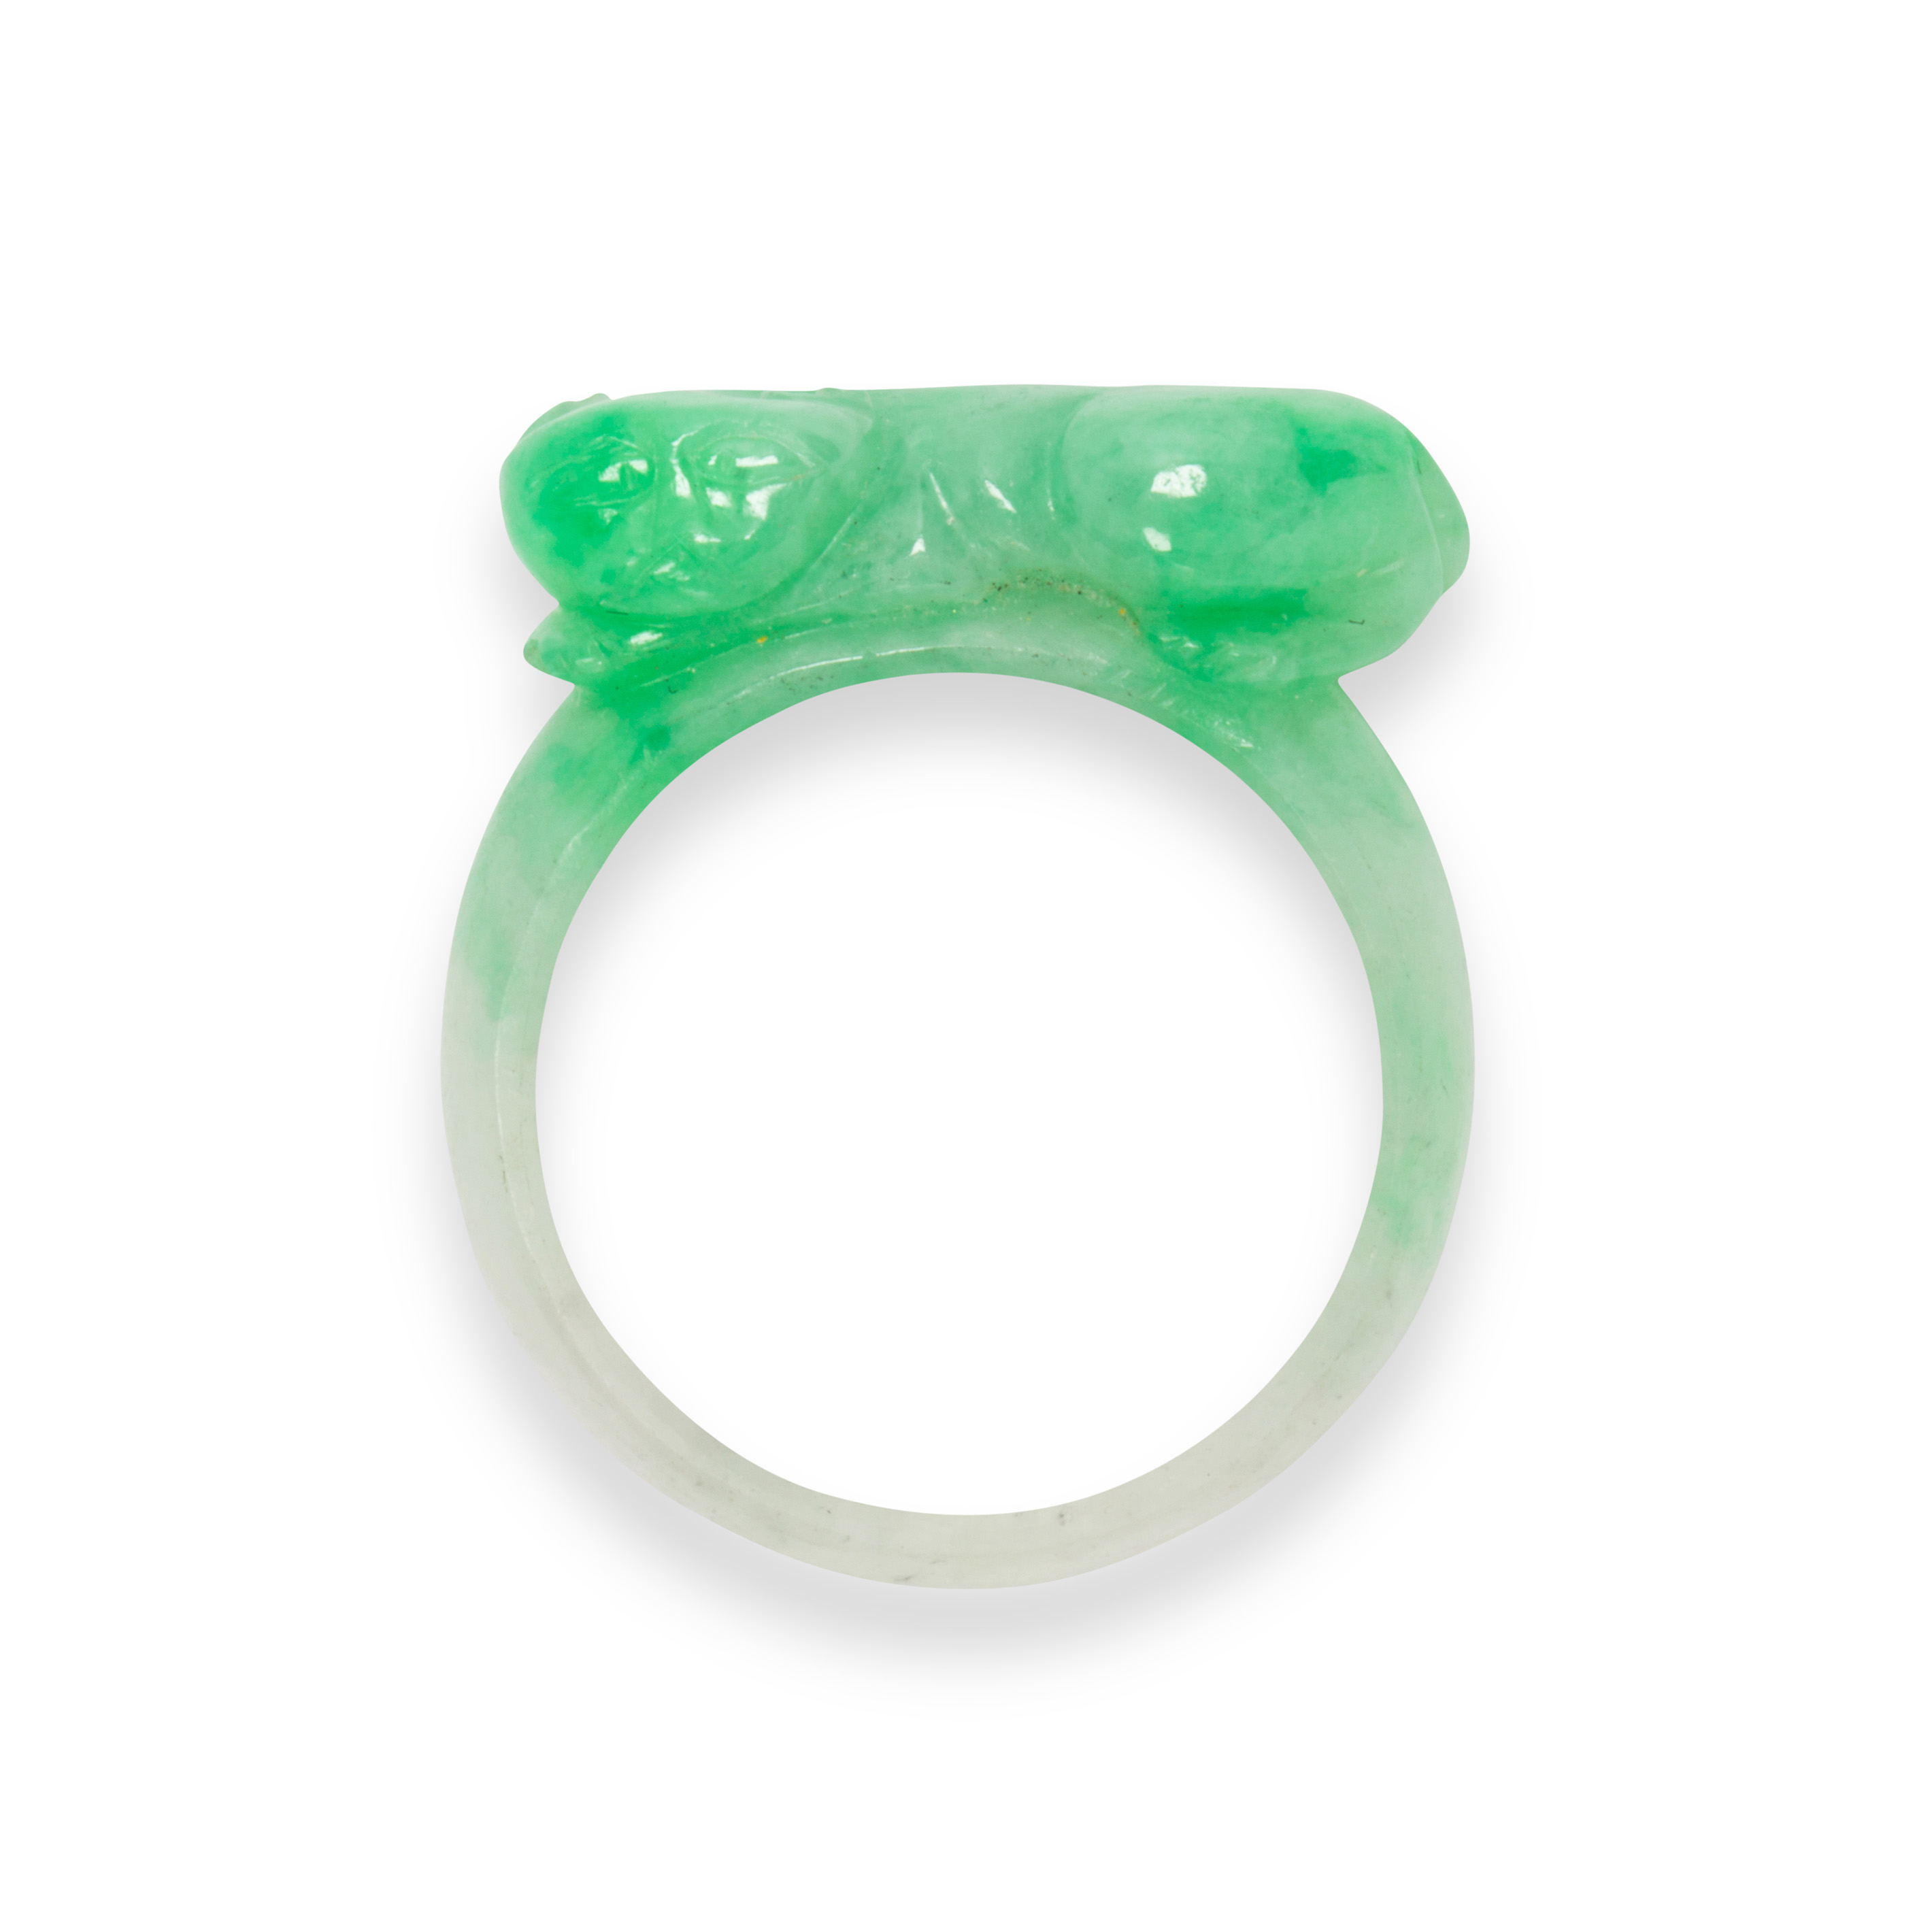 A JADEITE RING A jadeite ring
designed